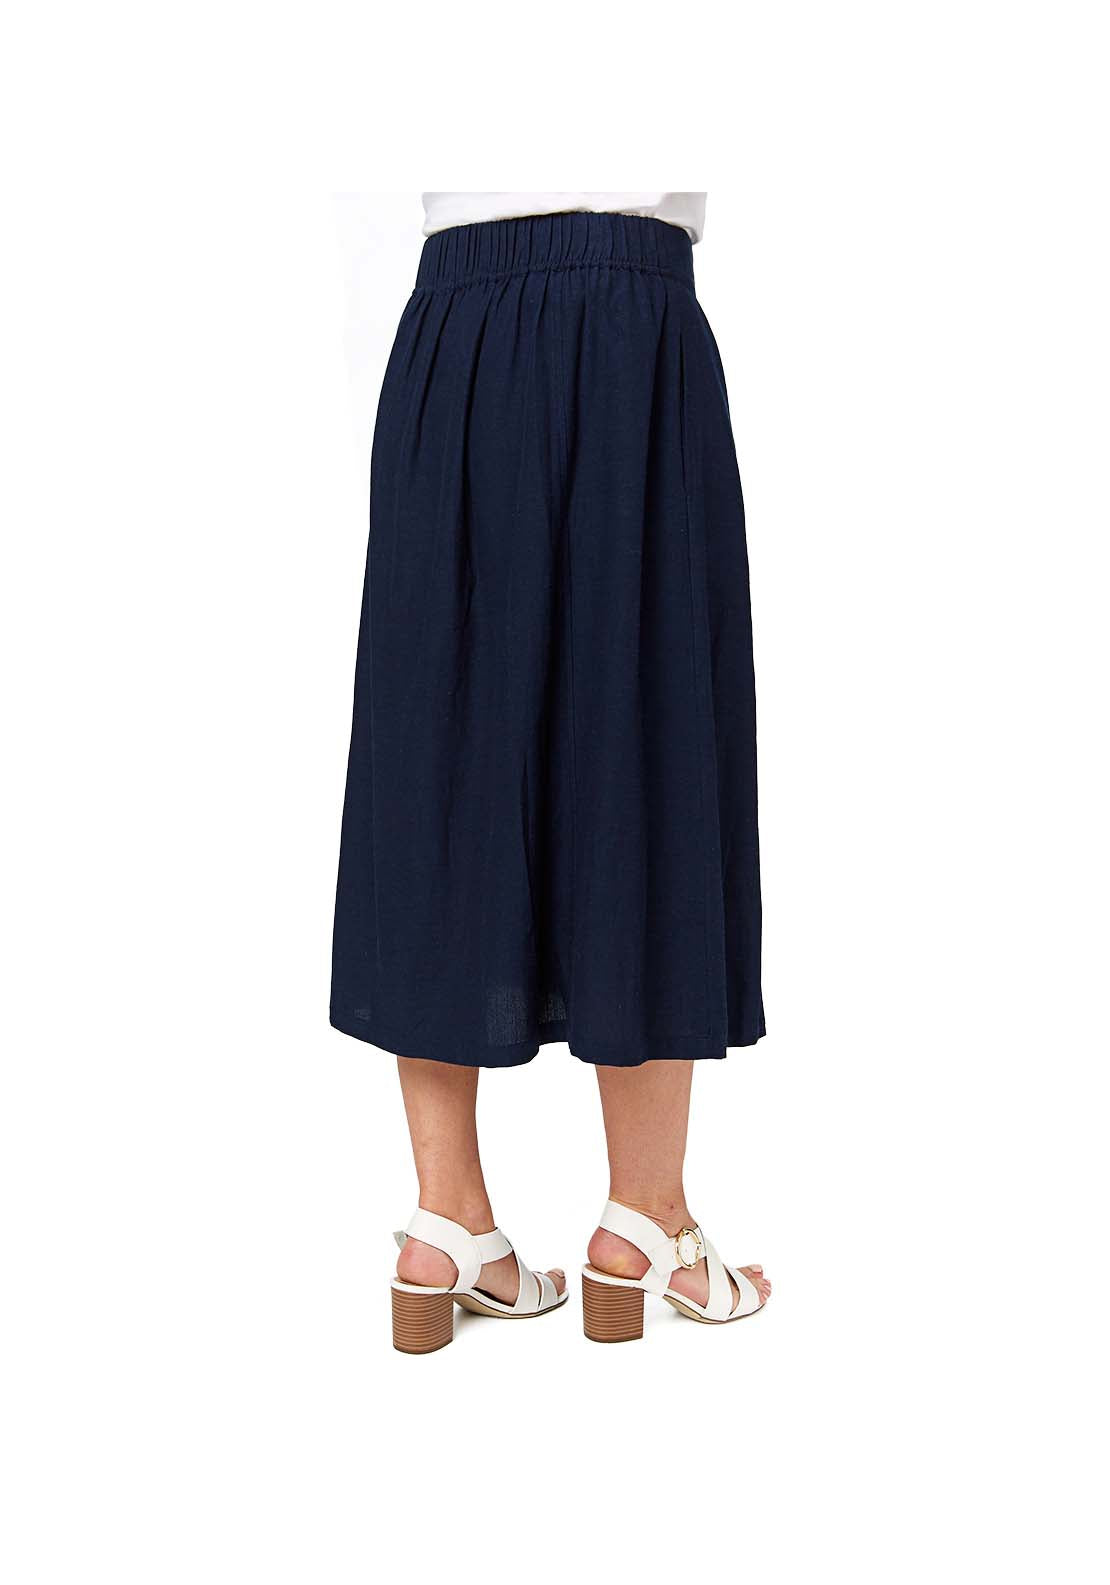 Tigiwear French Navy Linen Skirt 4 Shaws Department Stores